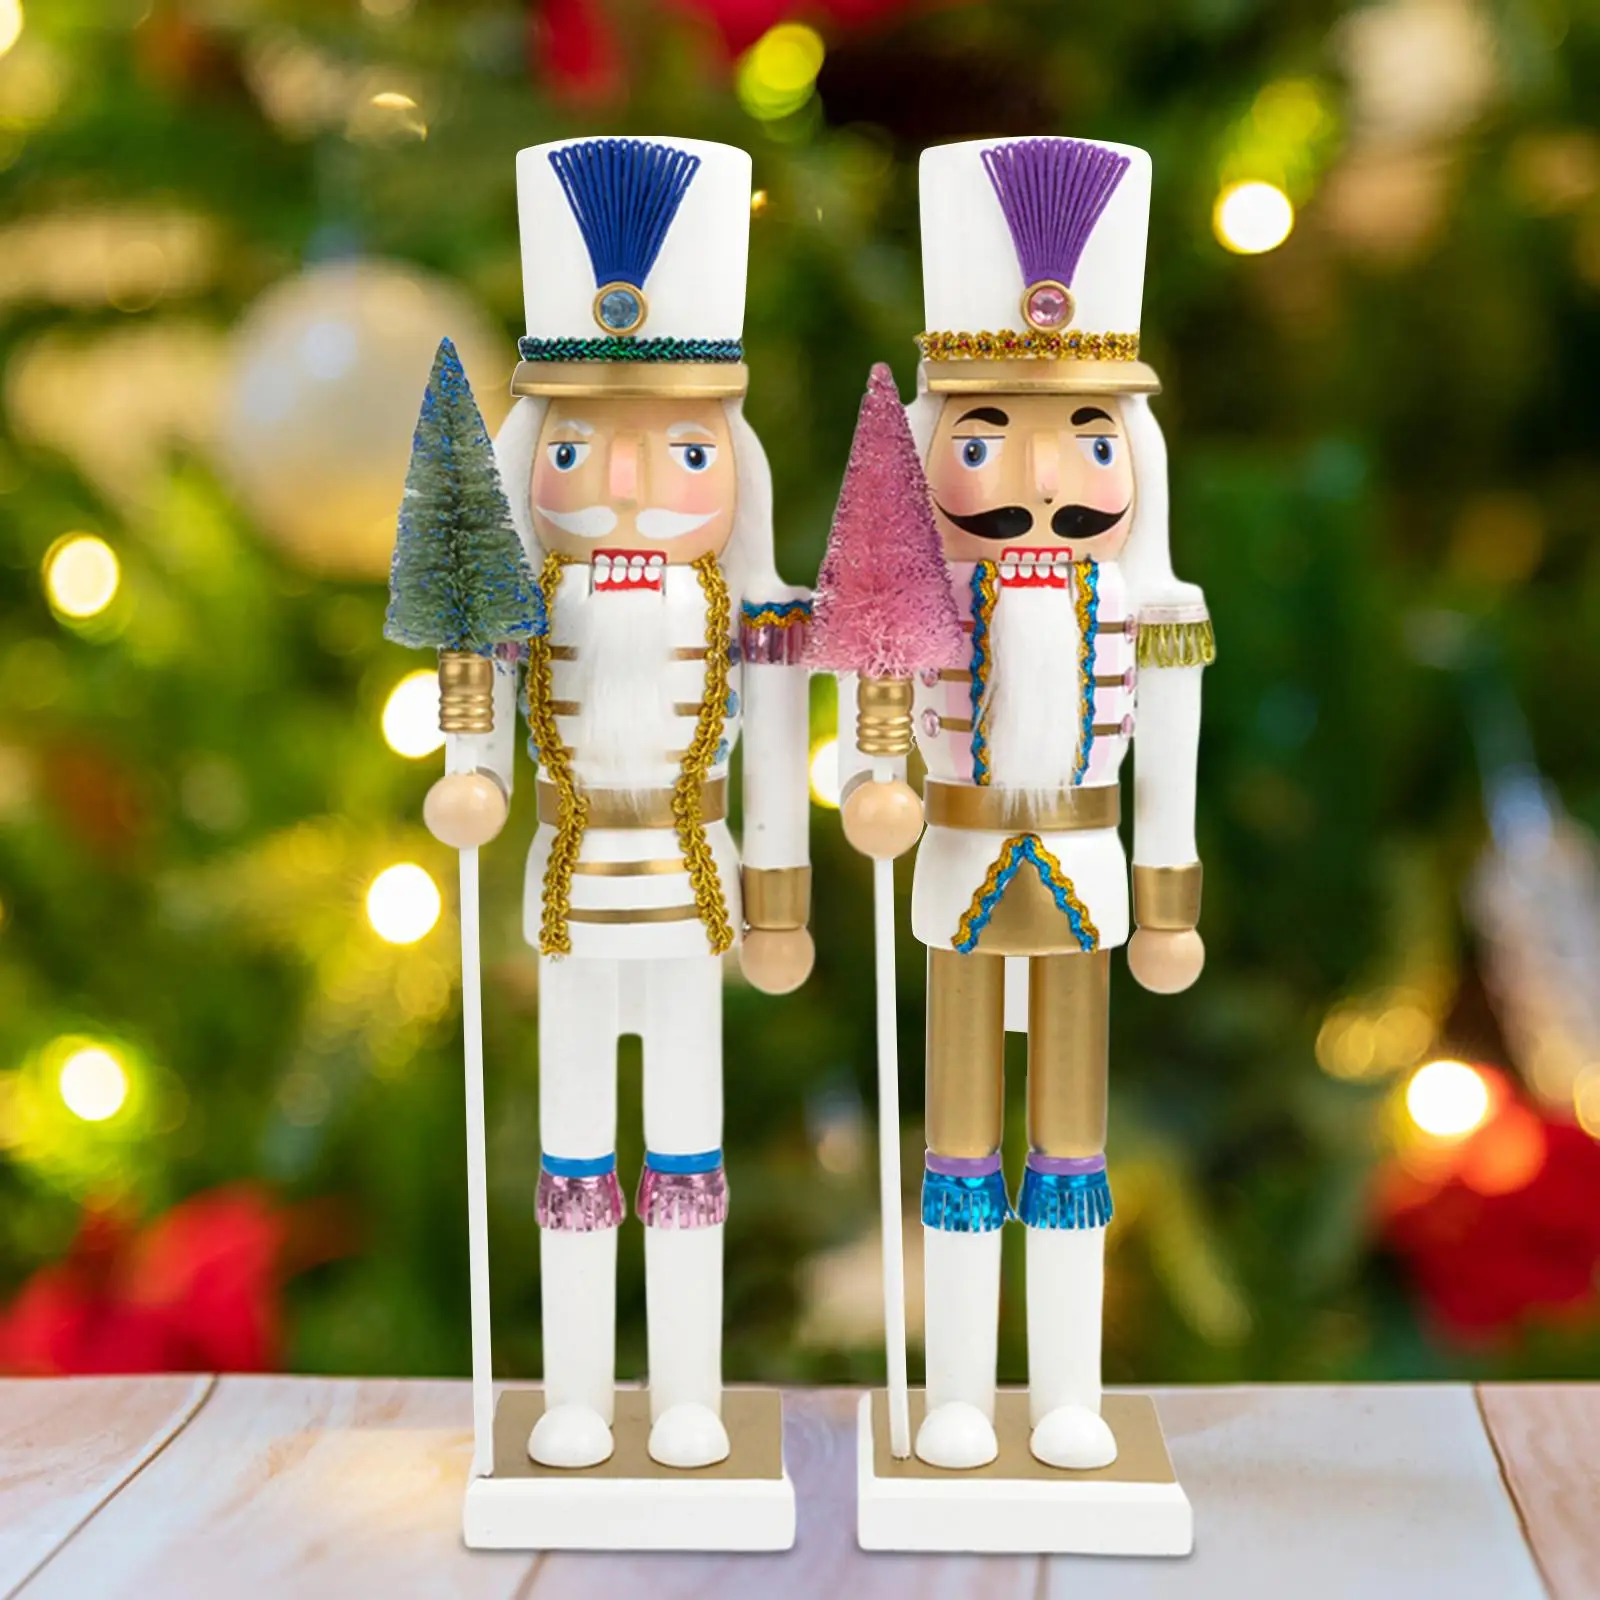 2 Pieces Christmas Nutcracker Ornament Party Favors Decor Hand Painted Doll